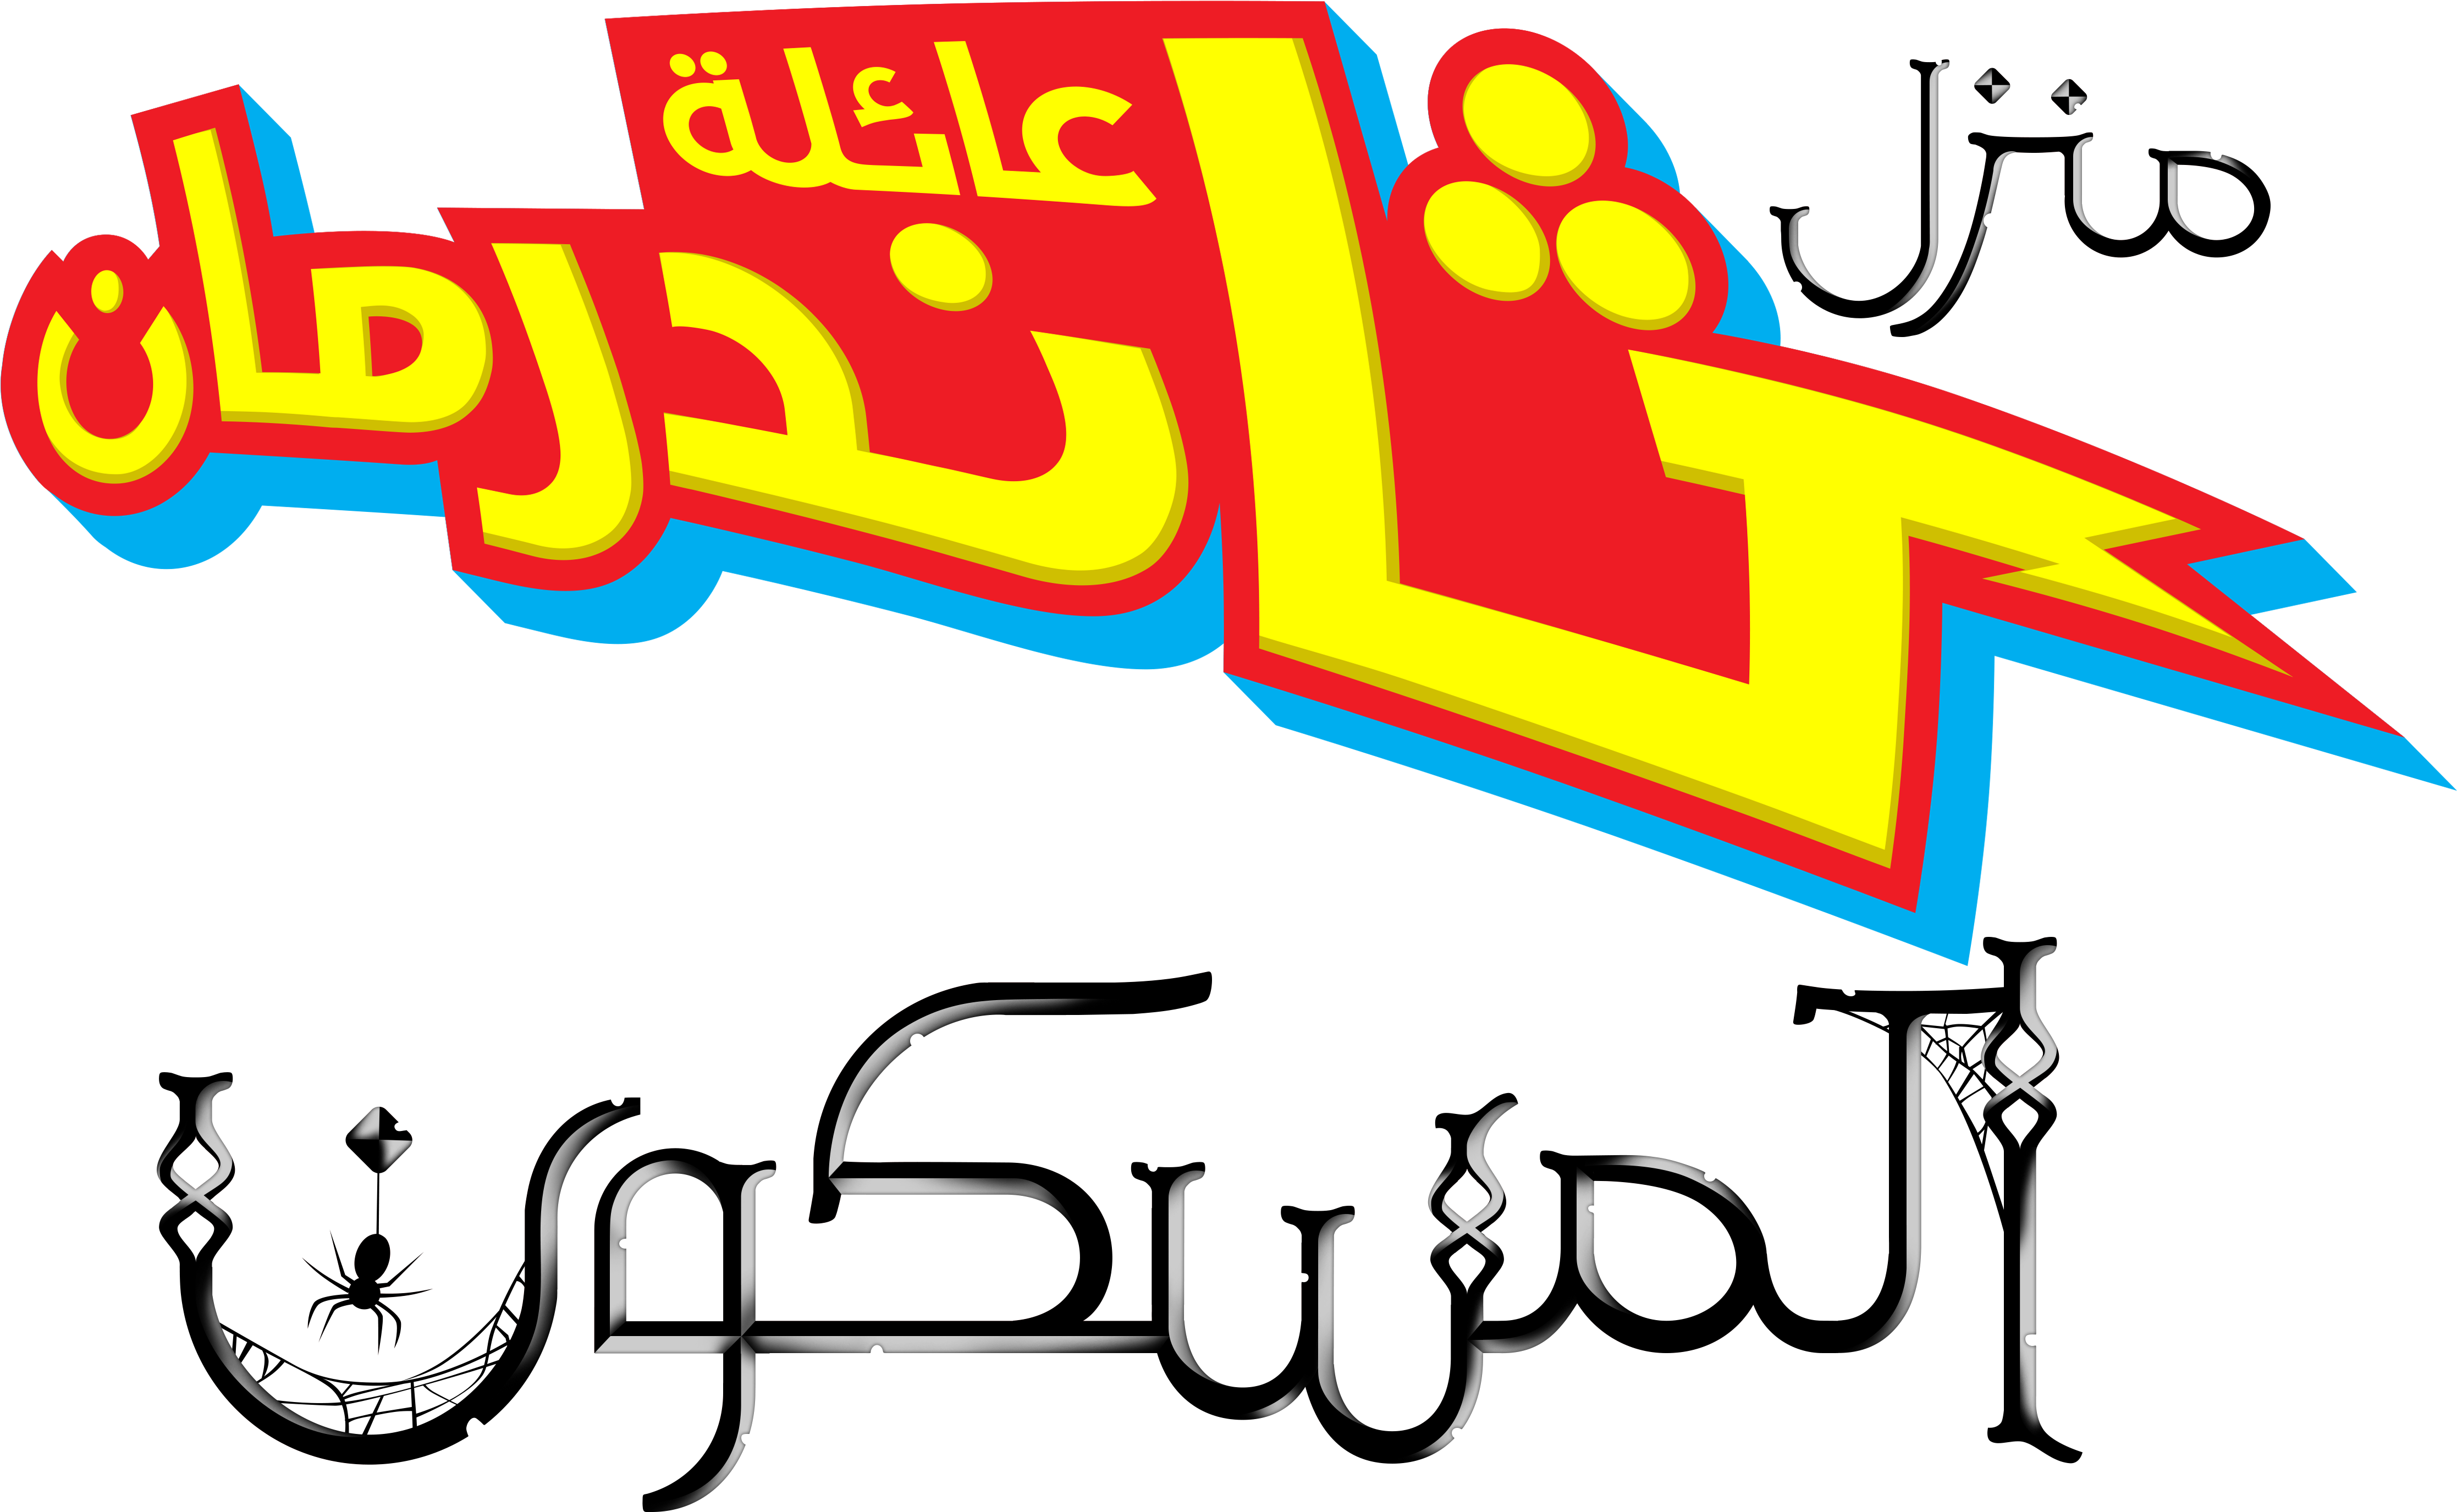 Nickelodeon Images نكلوديون العربية Nickelodeon Arabia - Thundermans Png (7800x4011), Png Download